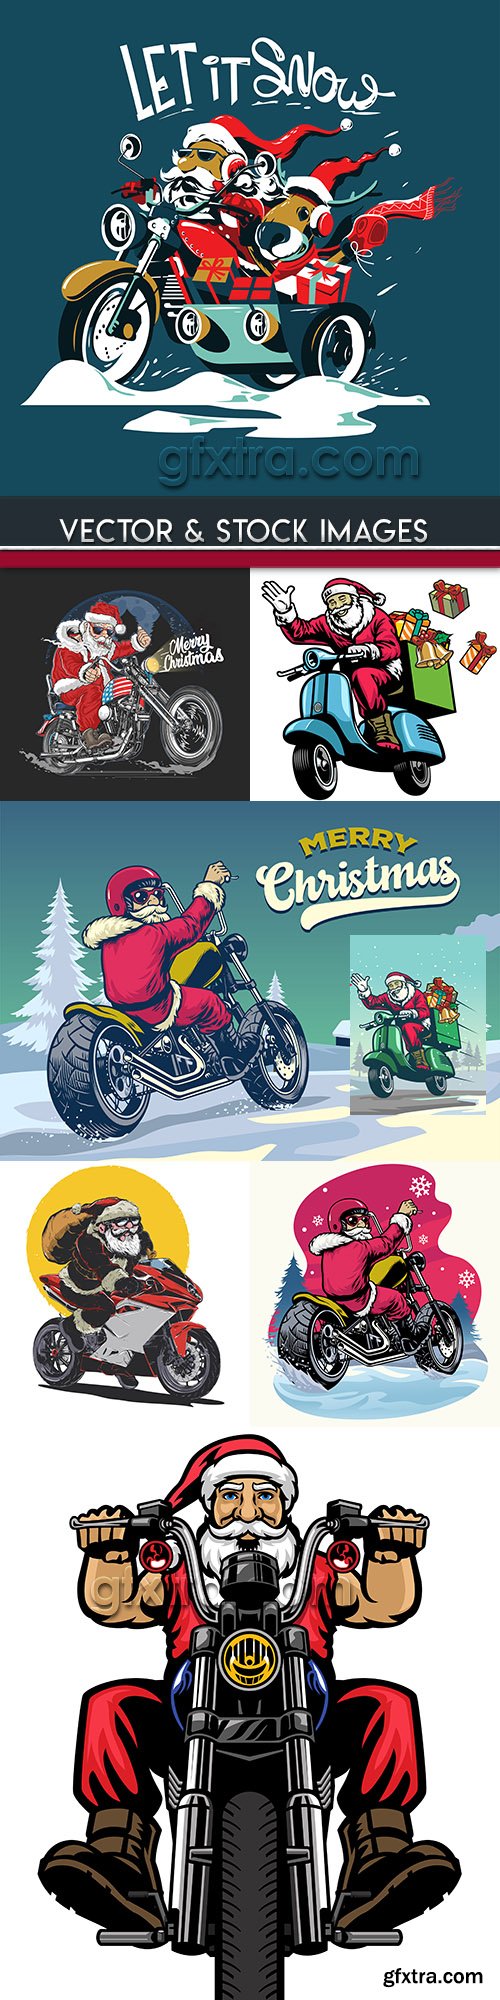 Santa Claus on motorcycle Christmas vintage illustration